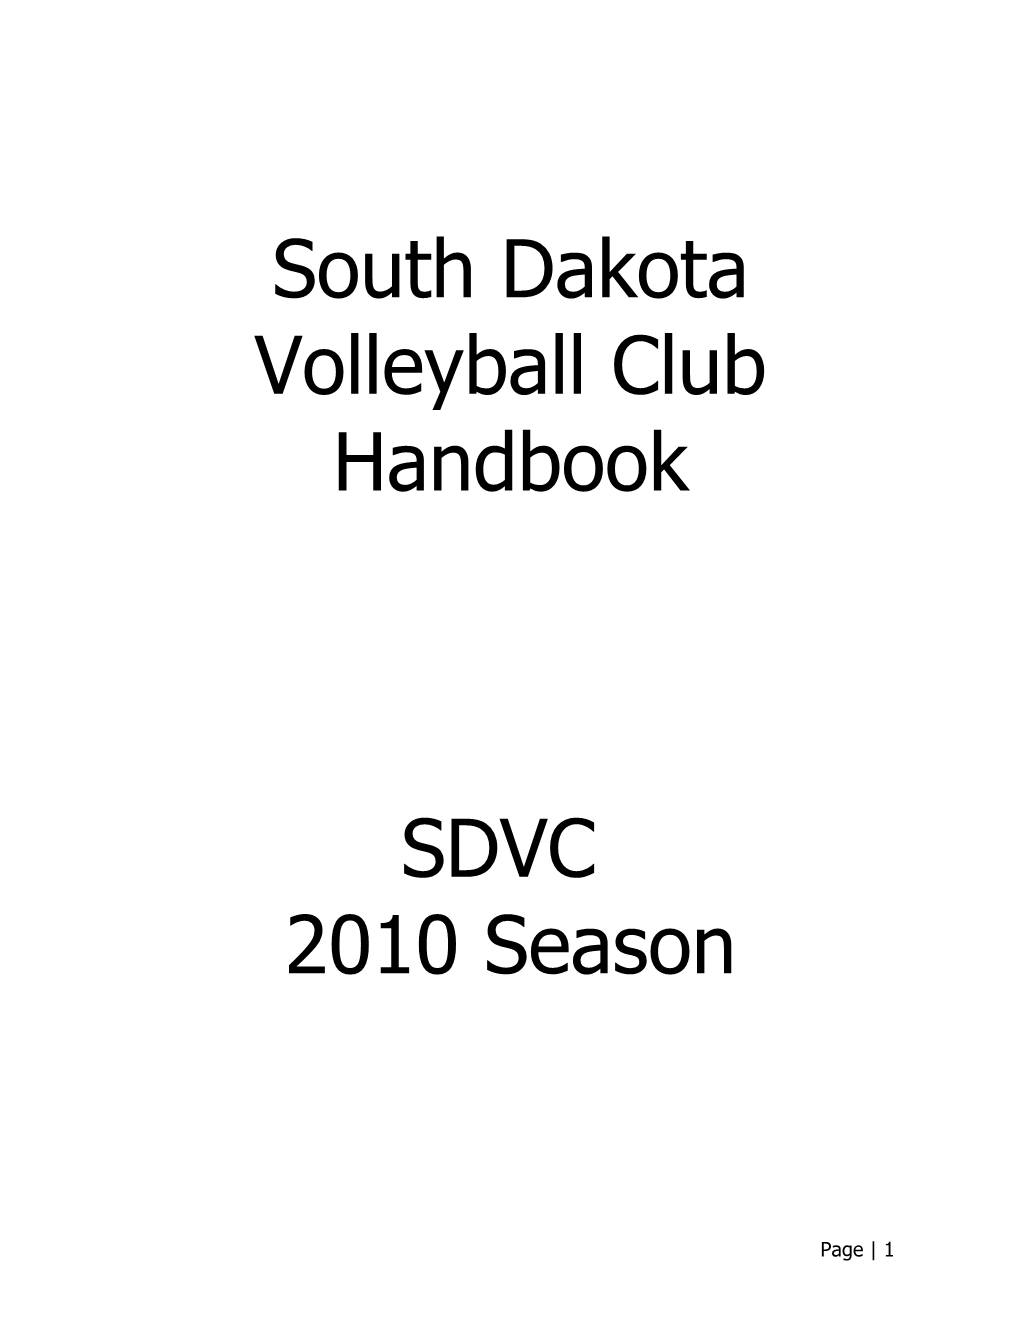 South Dakota Volleyball Club